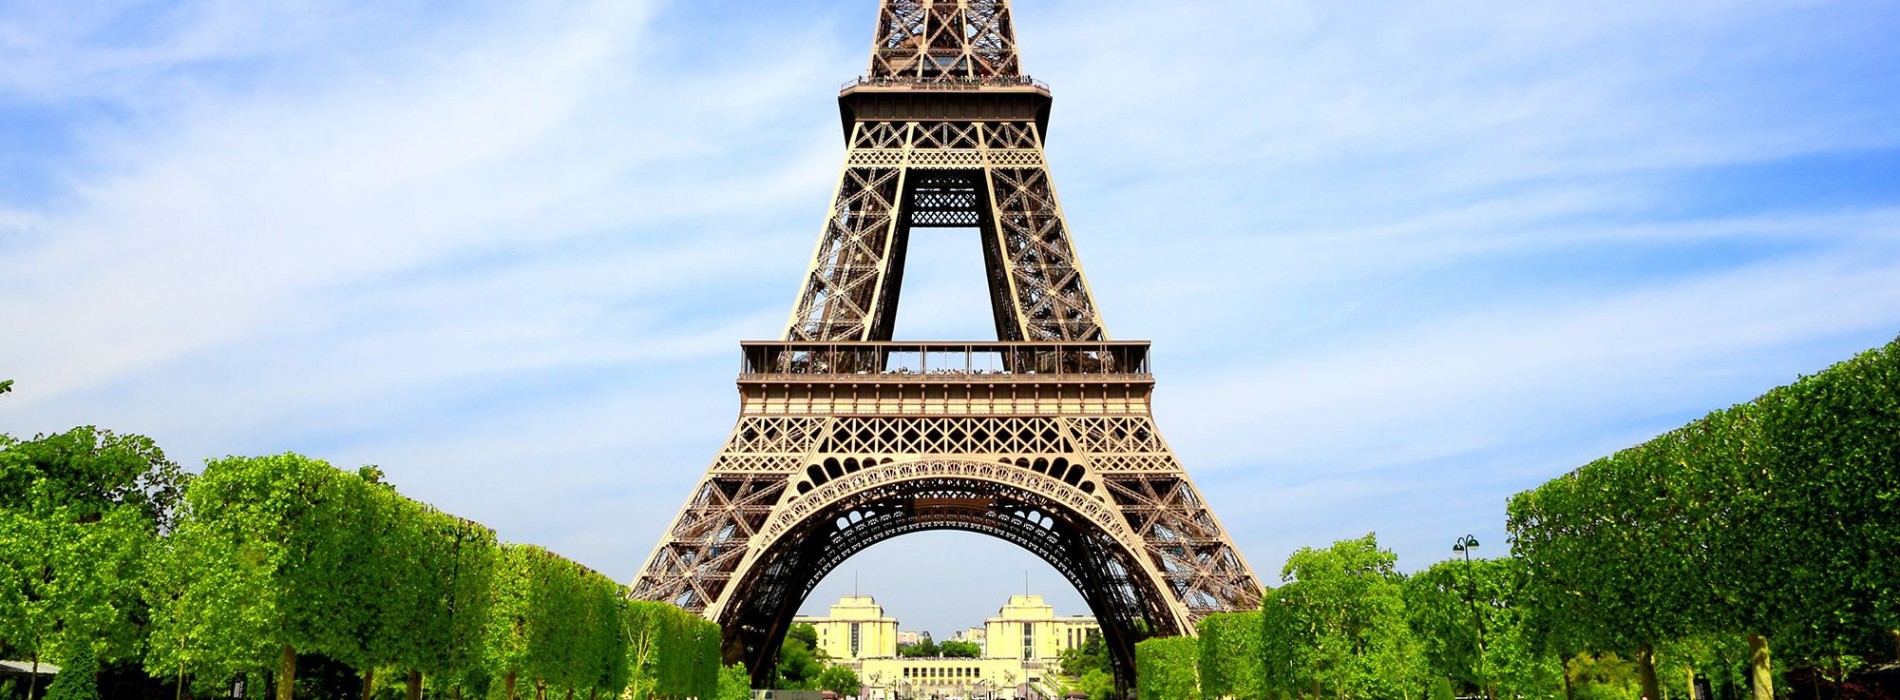 Eiffel Tower Approach